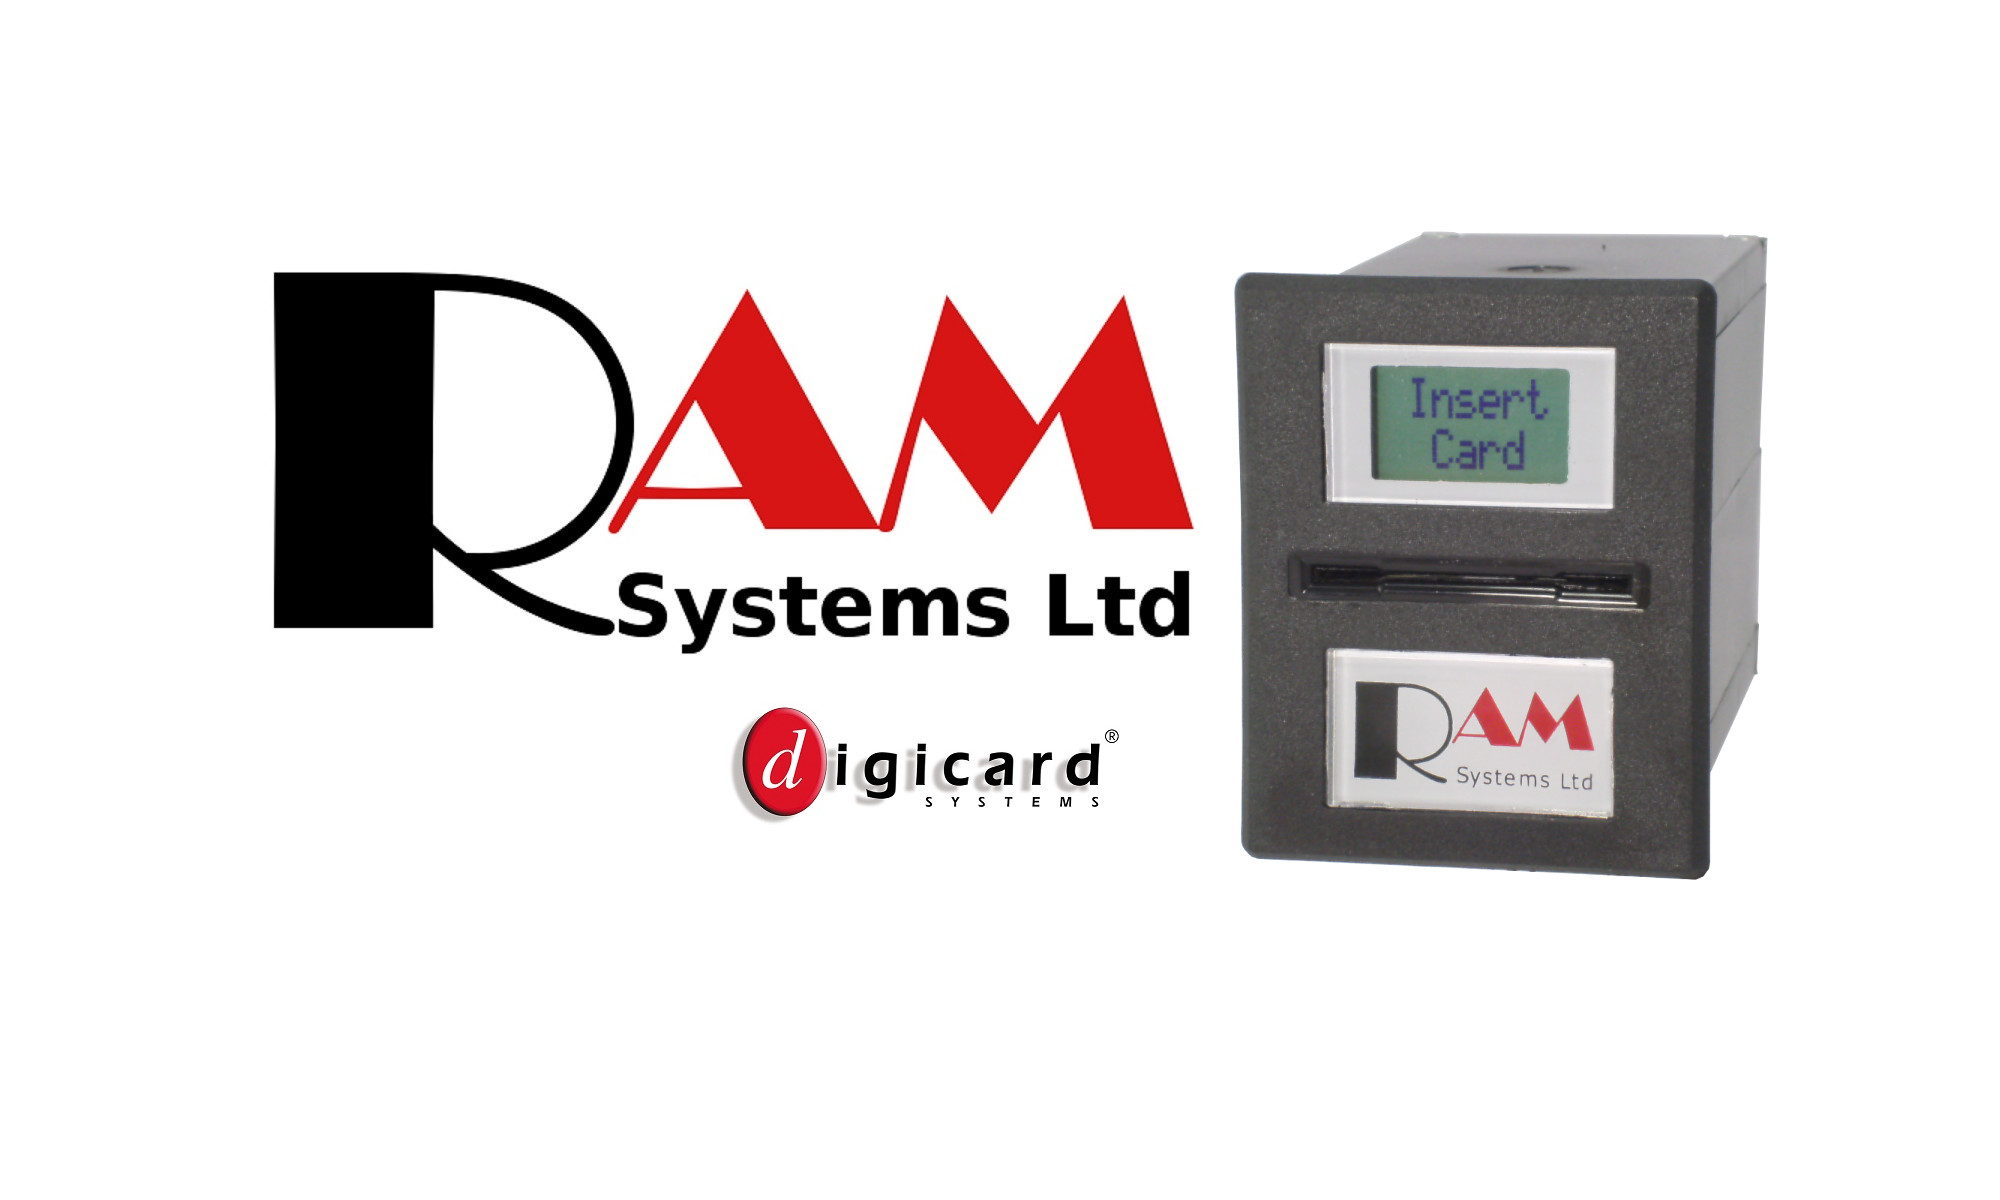 ram systems ltd